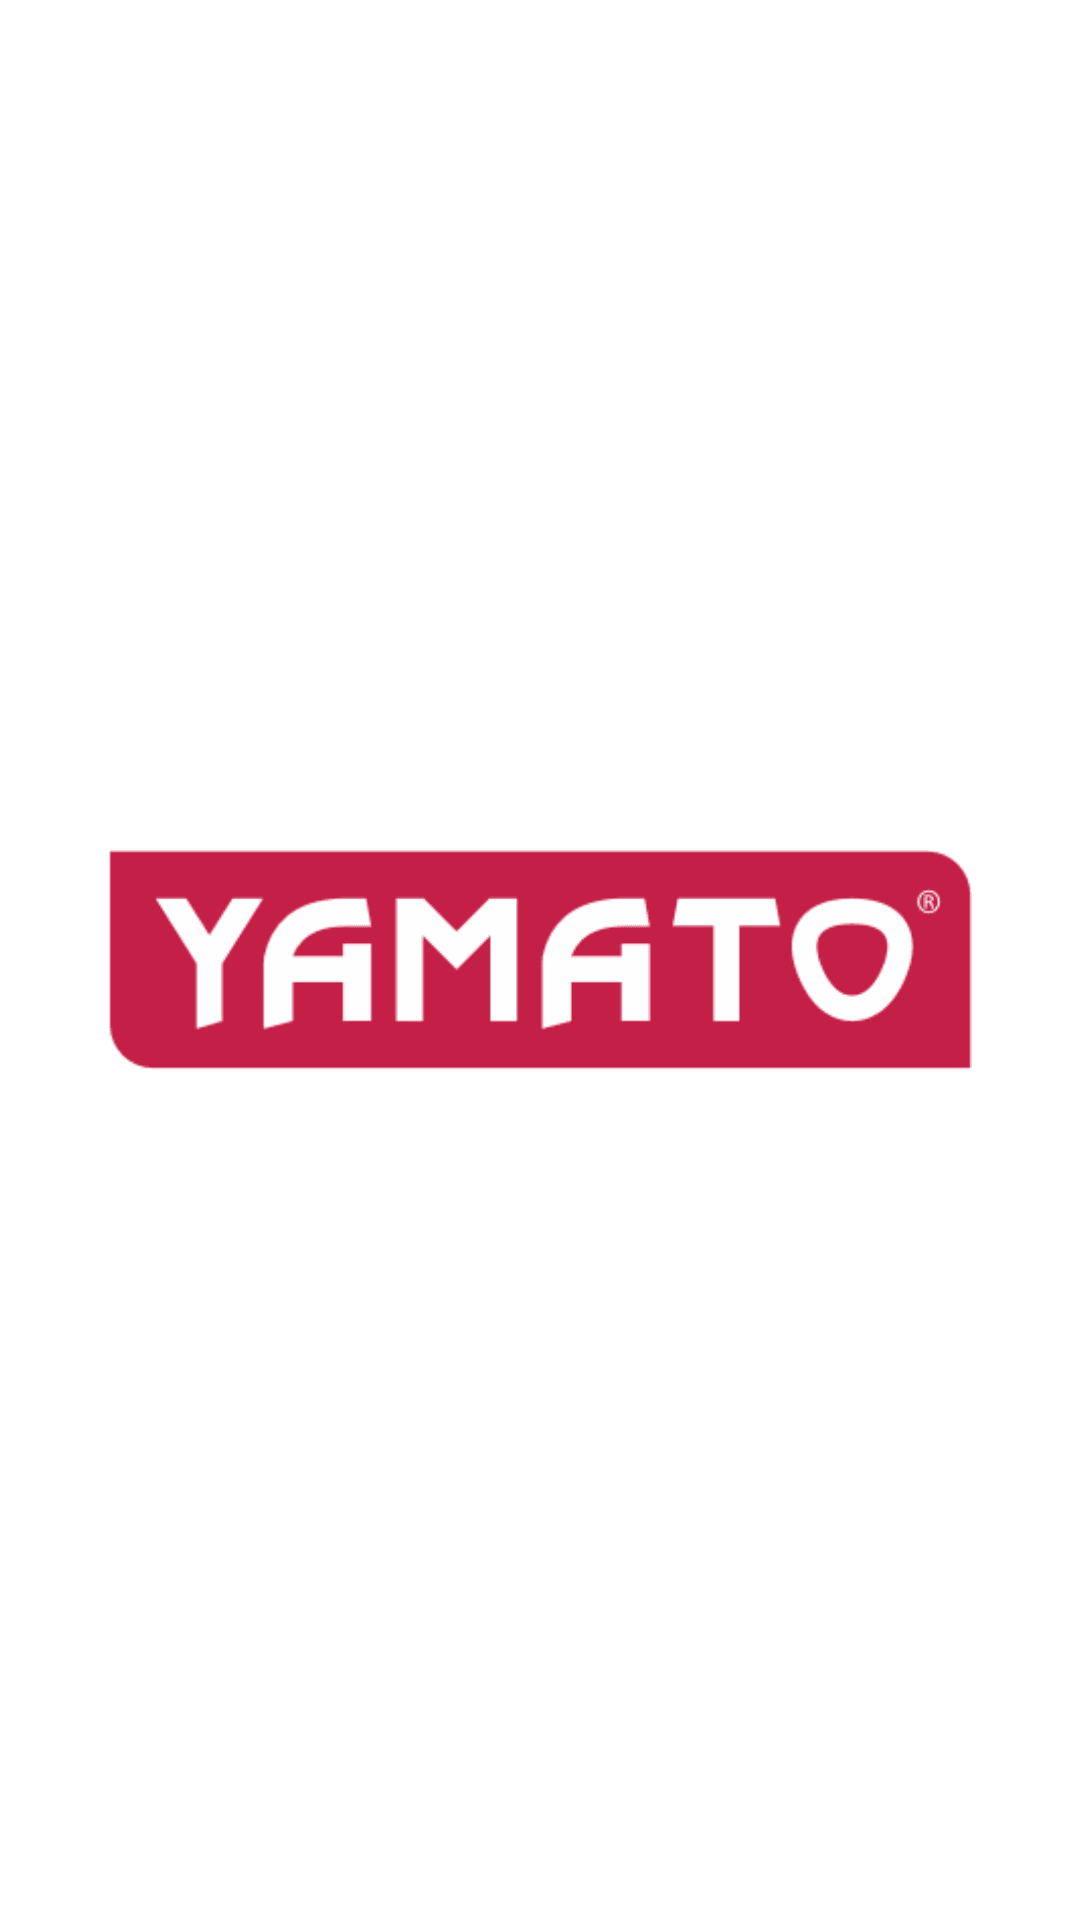 Yamato - Levigatrice orbitale elettrica 300W mm.230x115 Yamato